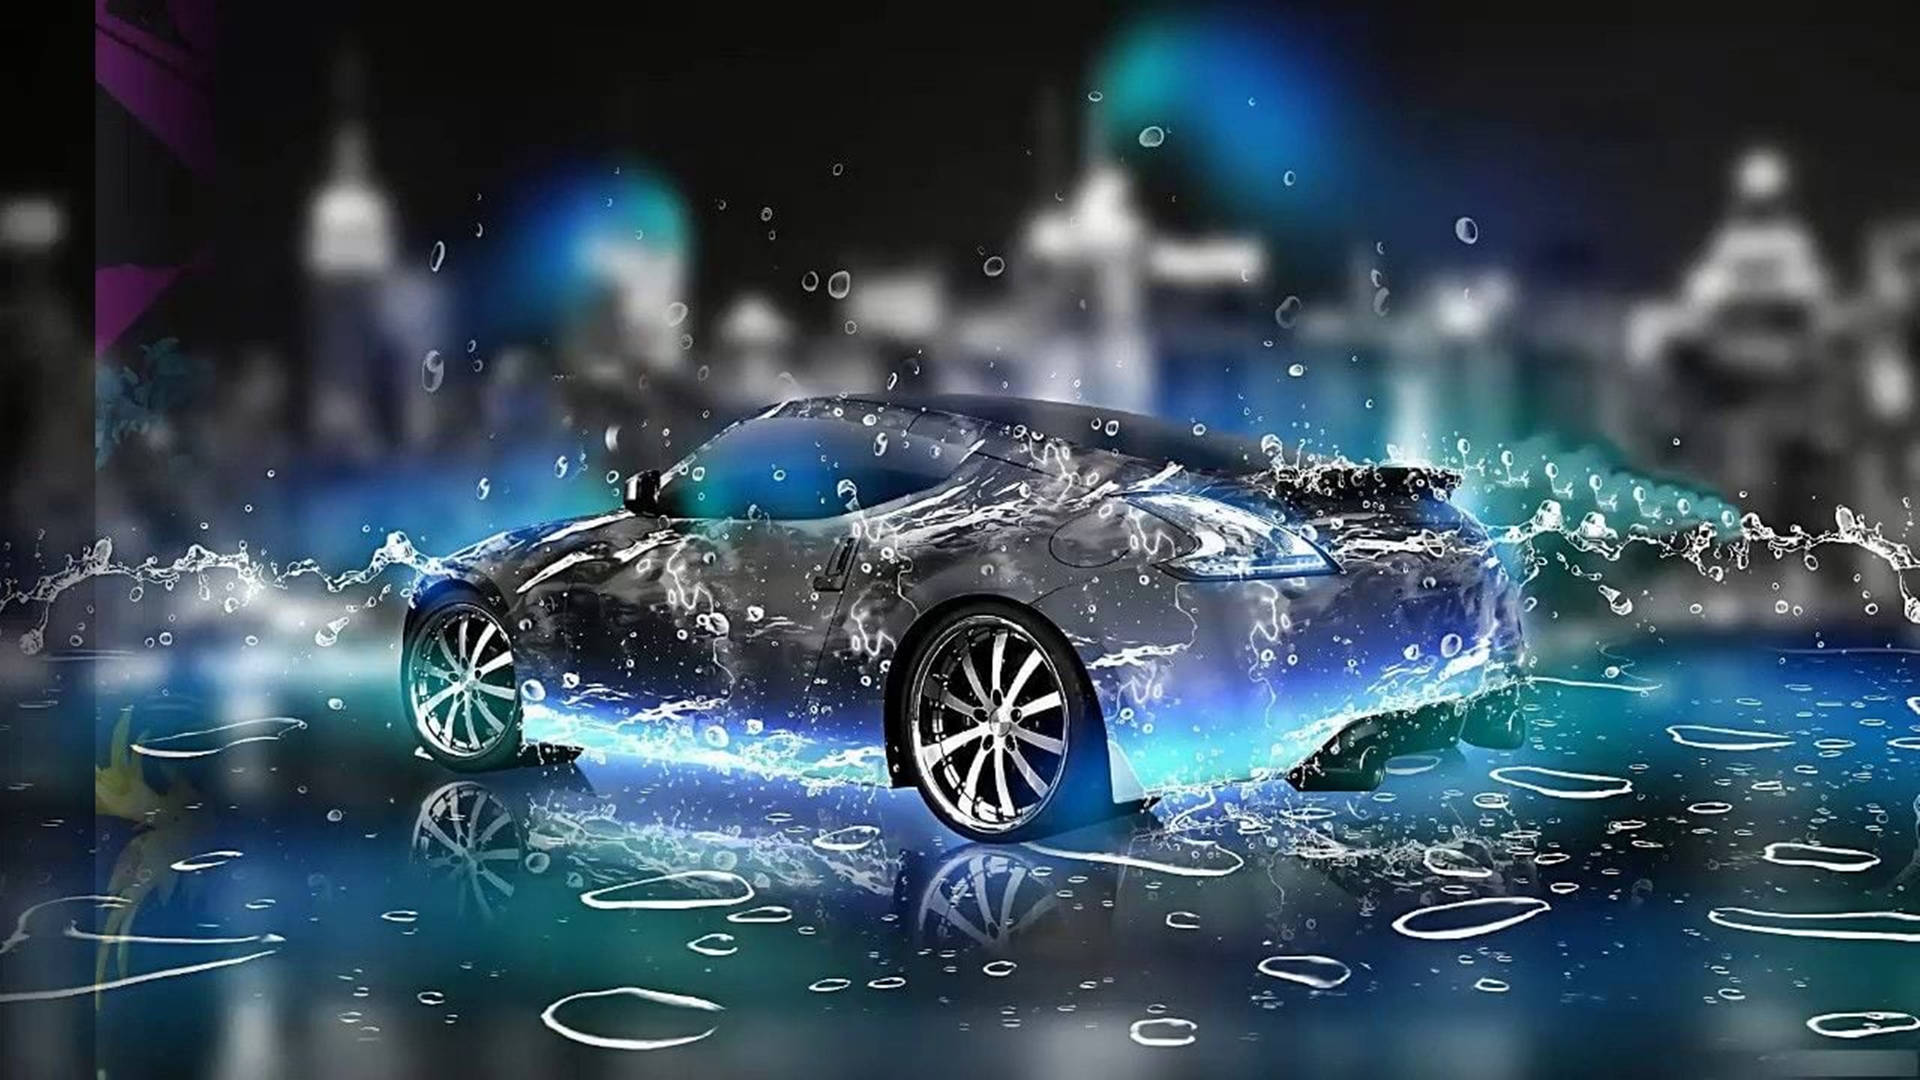 3d Hd Glowing Matchbox Car In The Rain Background